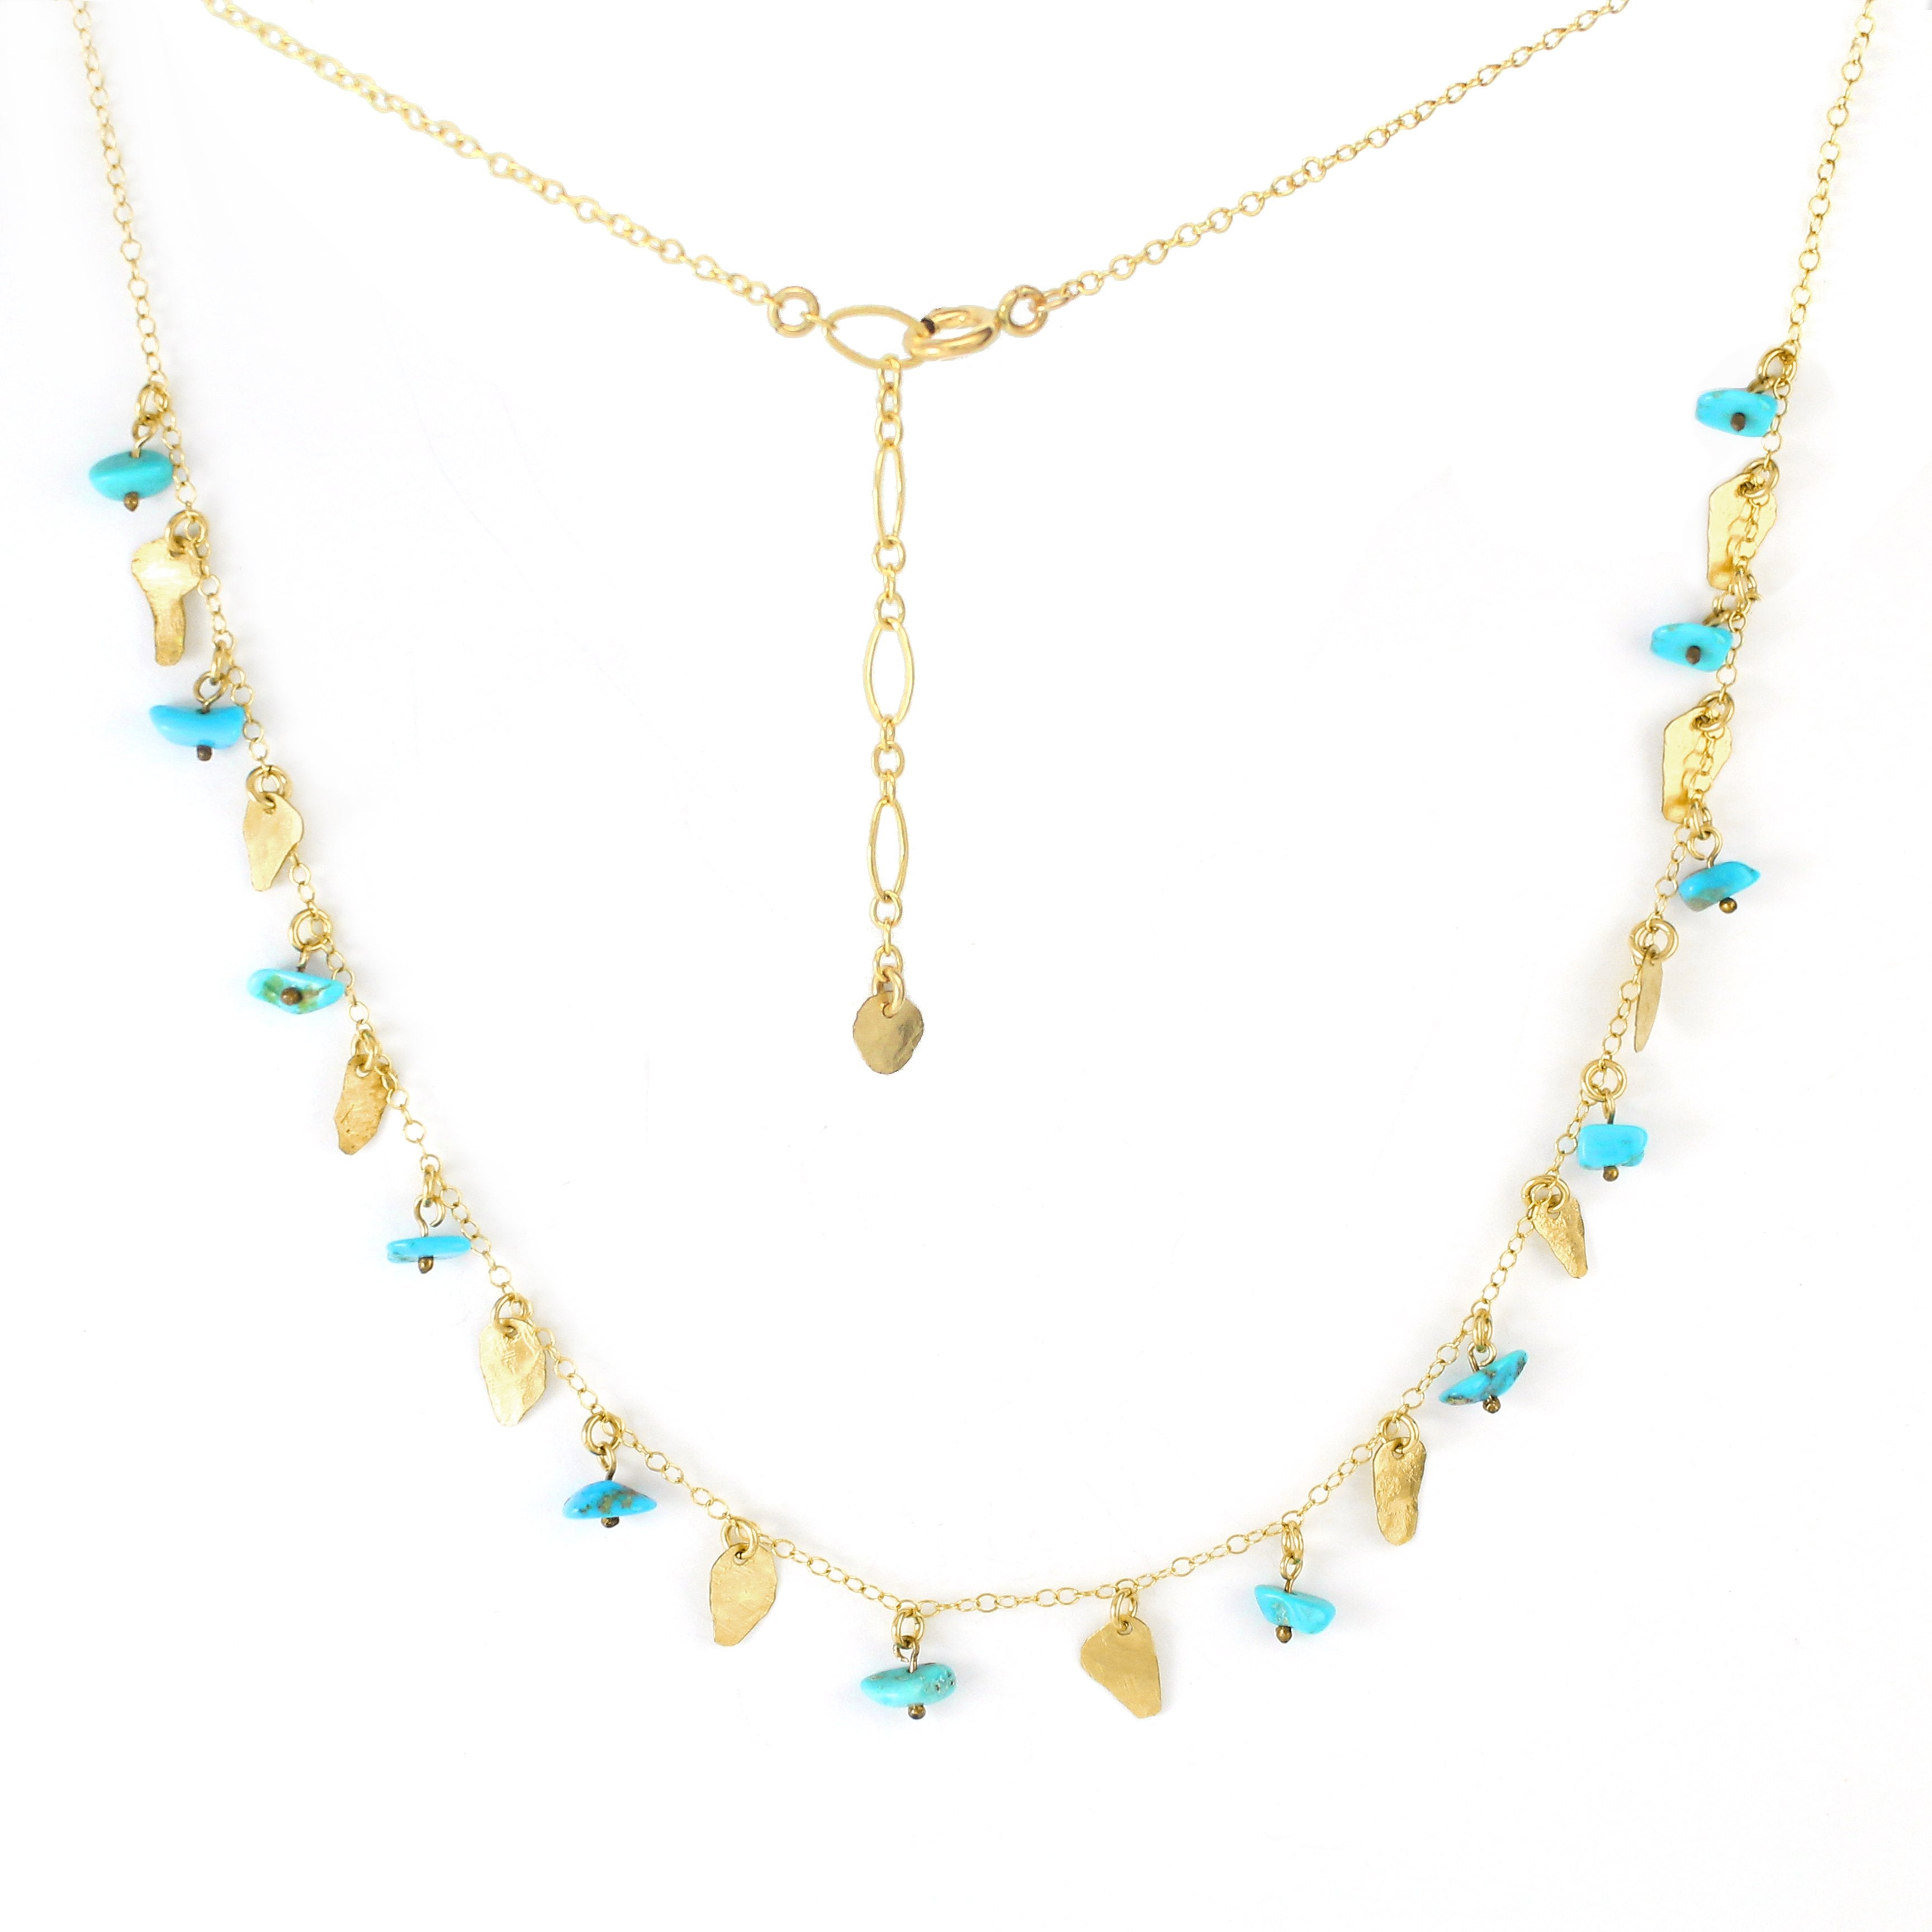 Gold filled Leaves & Turquoise Gemstones Elegant Necklace - Shulamit Kanter